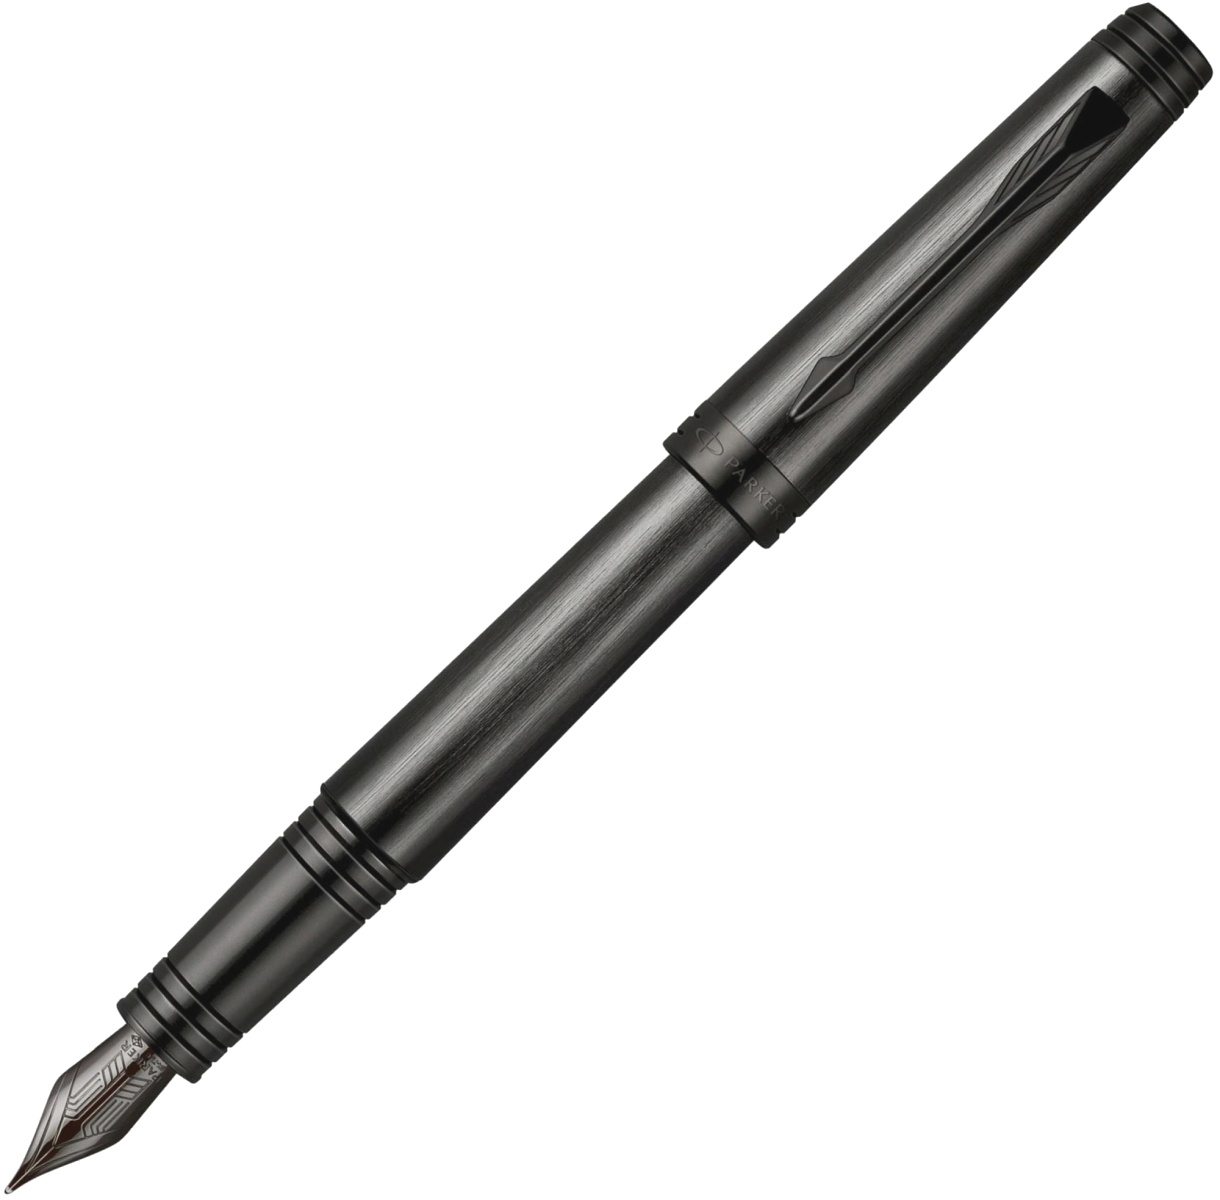 Перьевая ручка Parker Premier F563, Black Edition 2010 (Перо F)